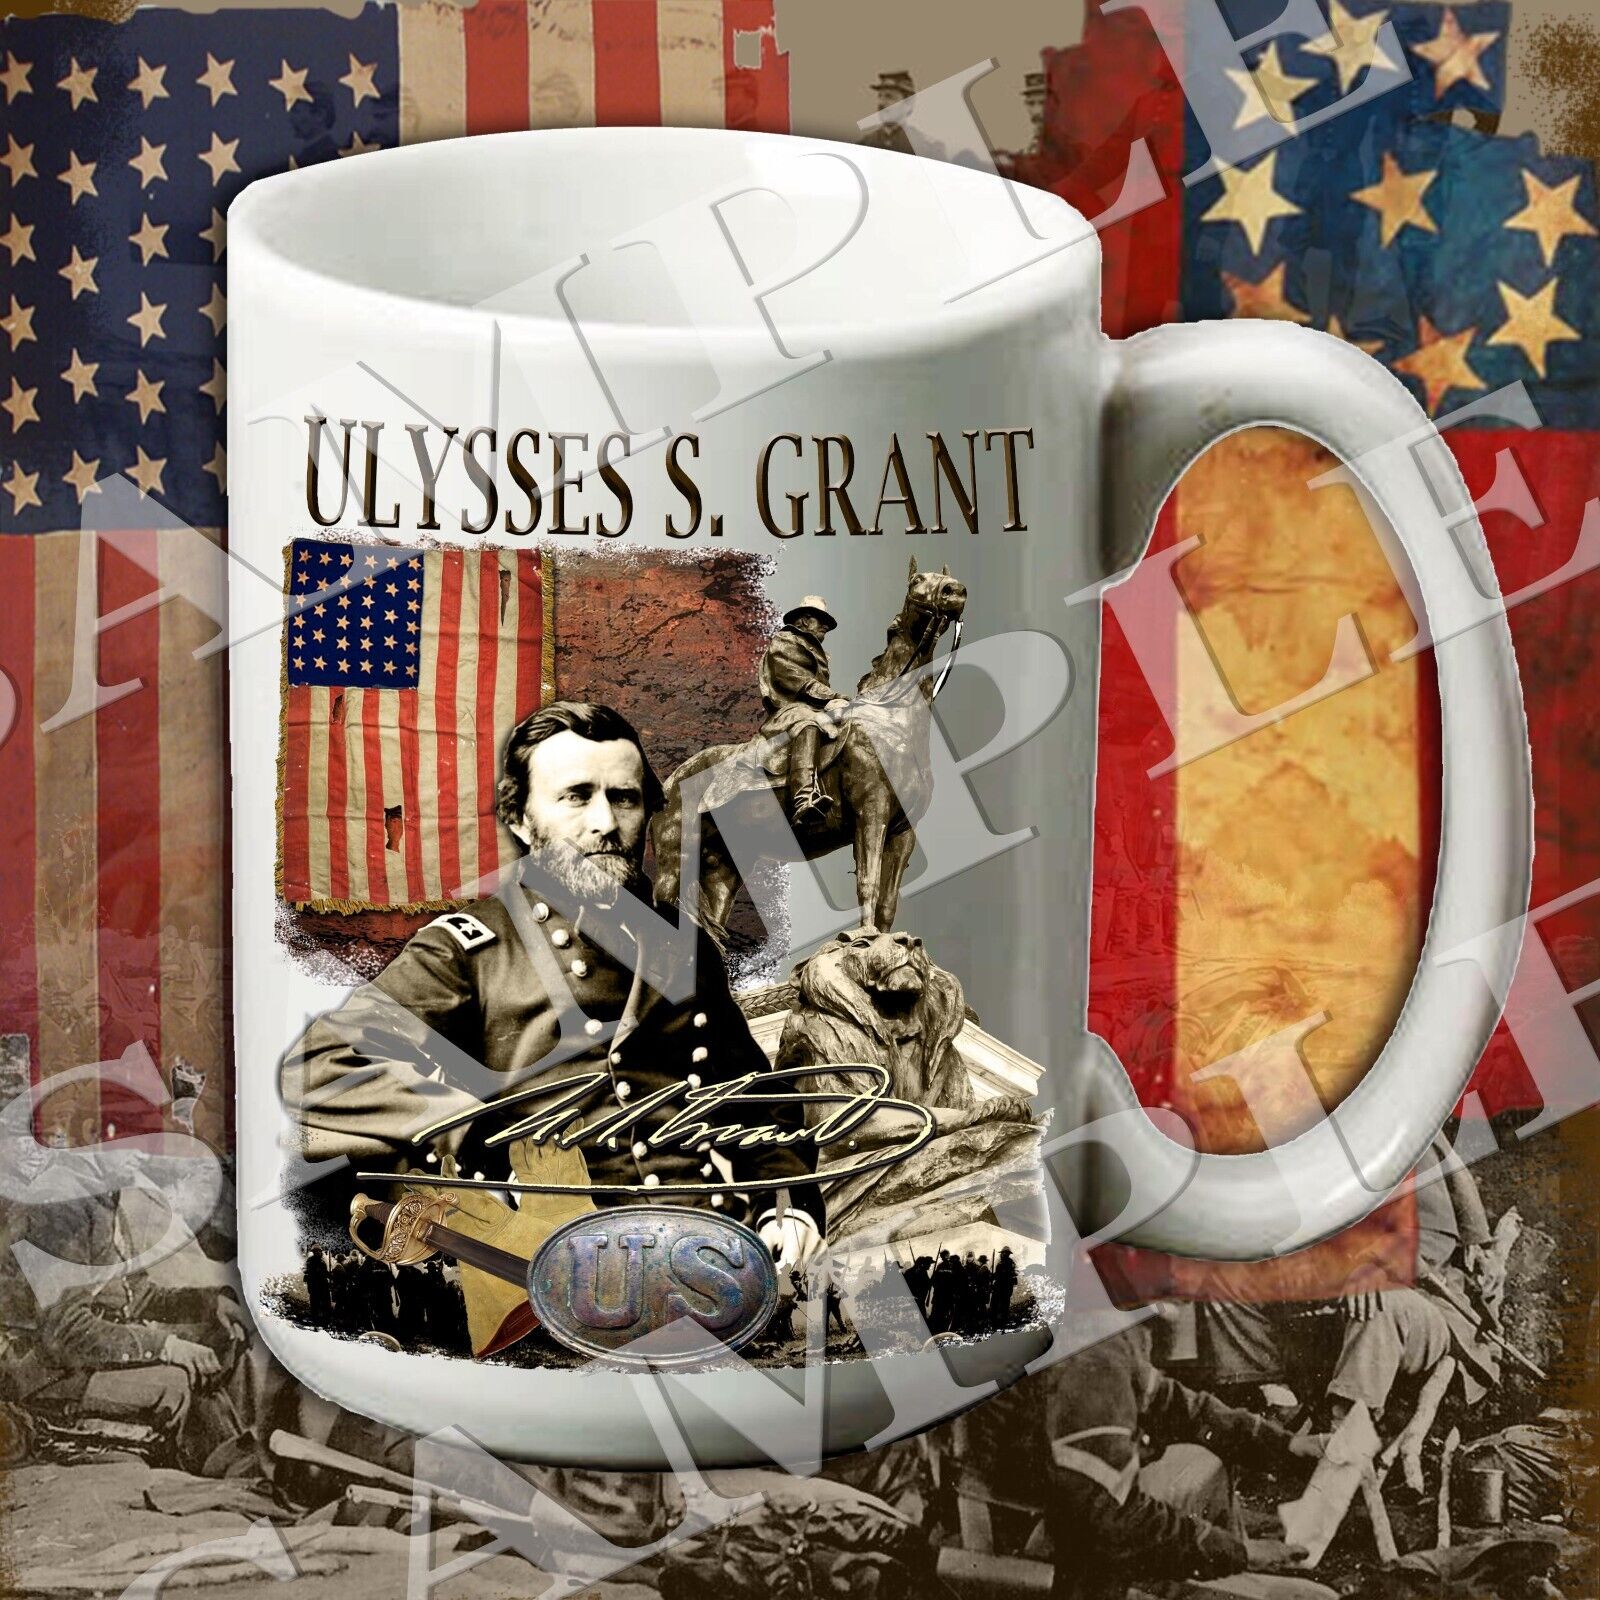 Ulysses S. Grant Signature Series 15-ounce American Civil War themed coffee mug